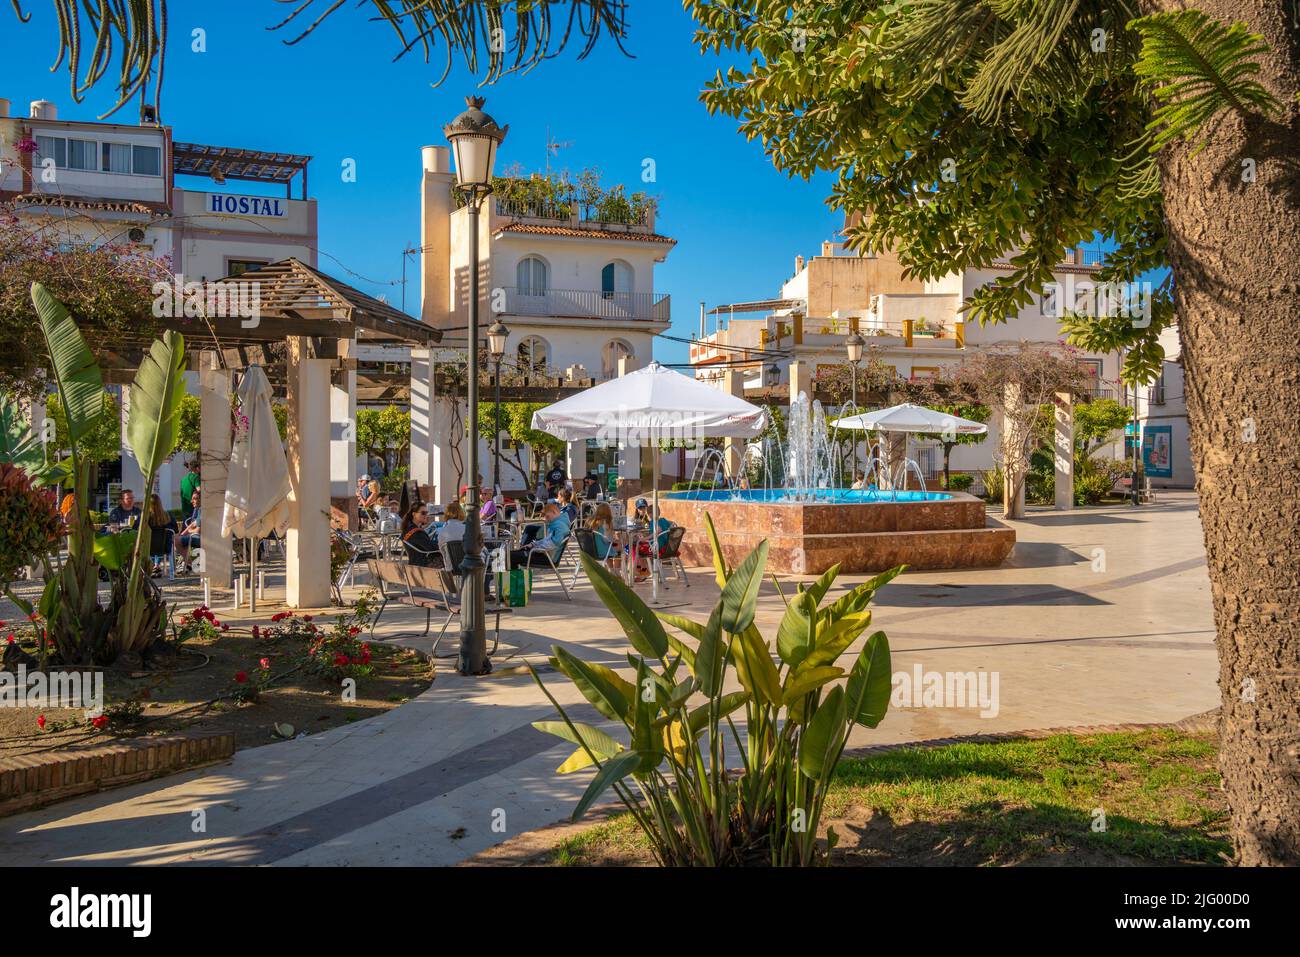 Cafe and fountain in Plaza Cantarero, Nerja, Malaga Province, Andalucia, Spain, Mediterranean, Europe Stock Photo